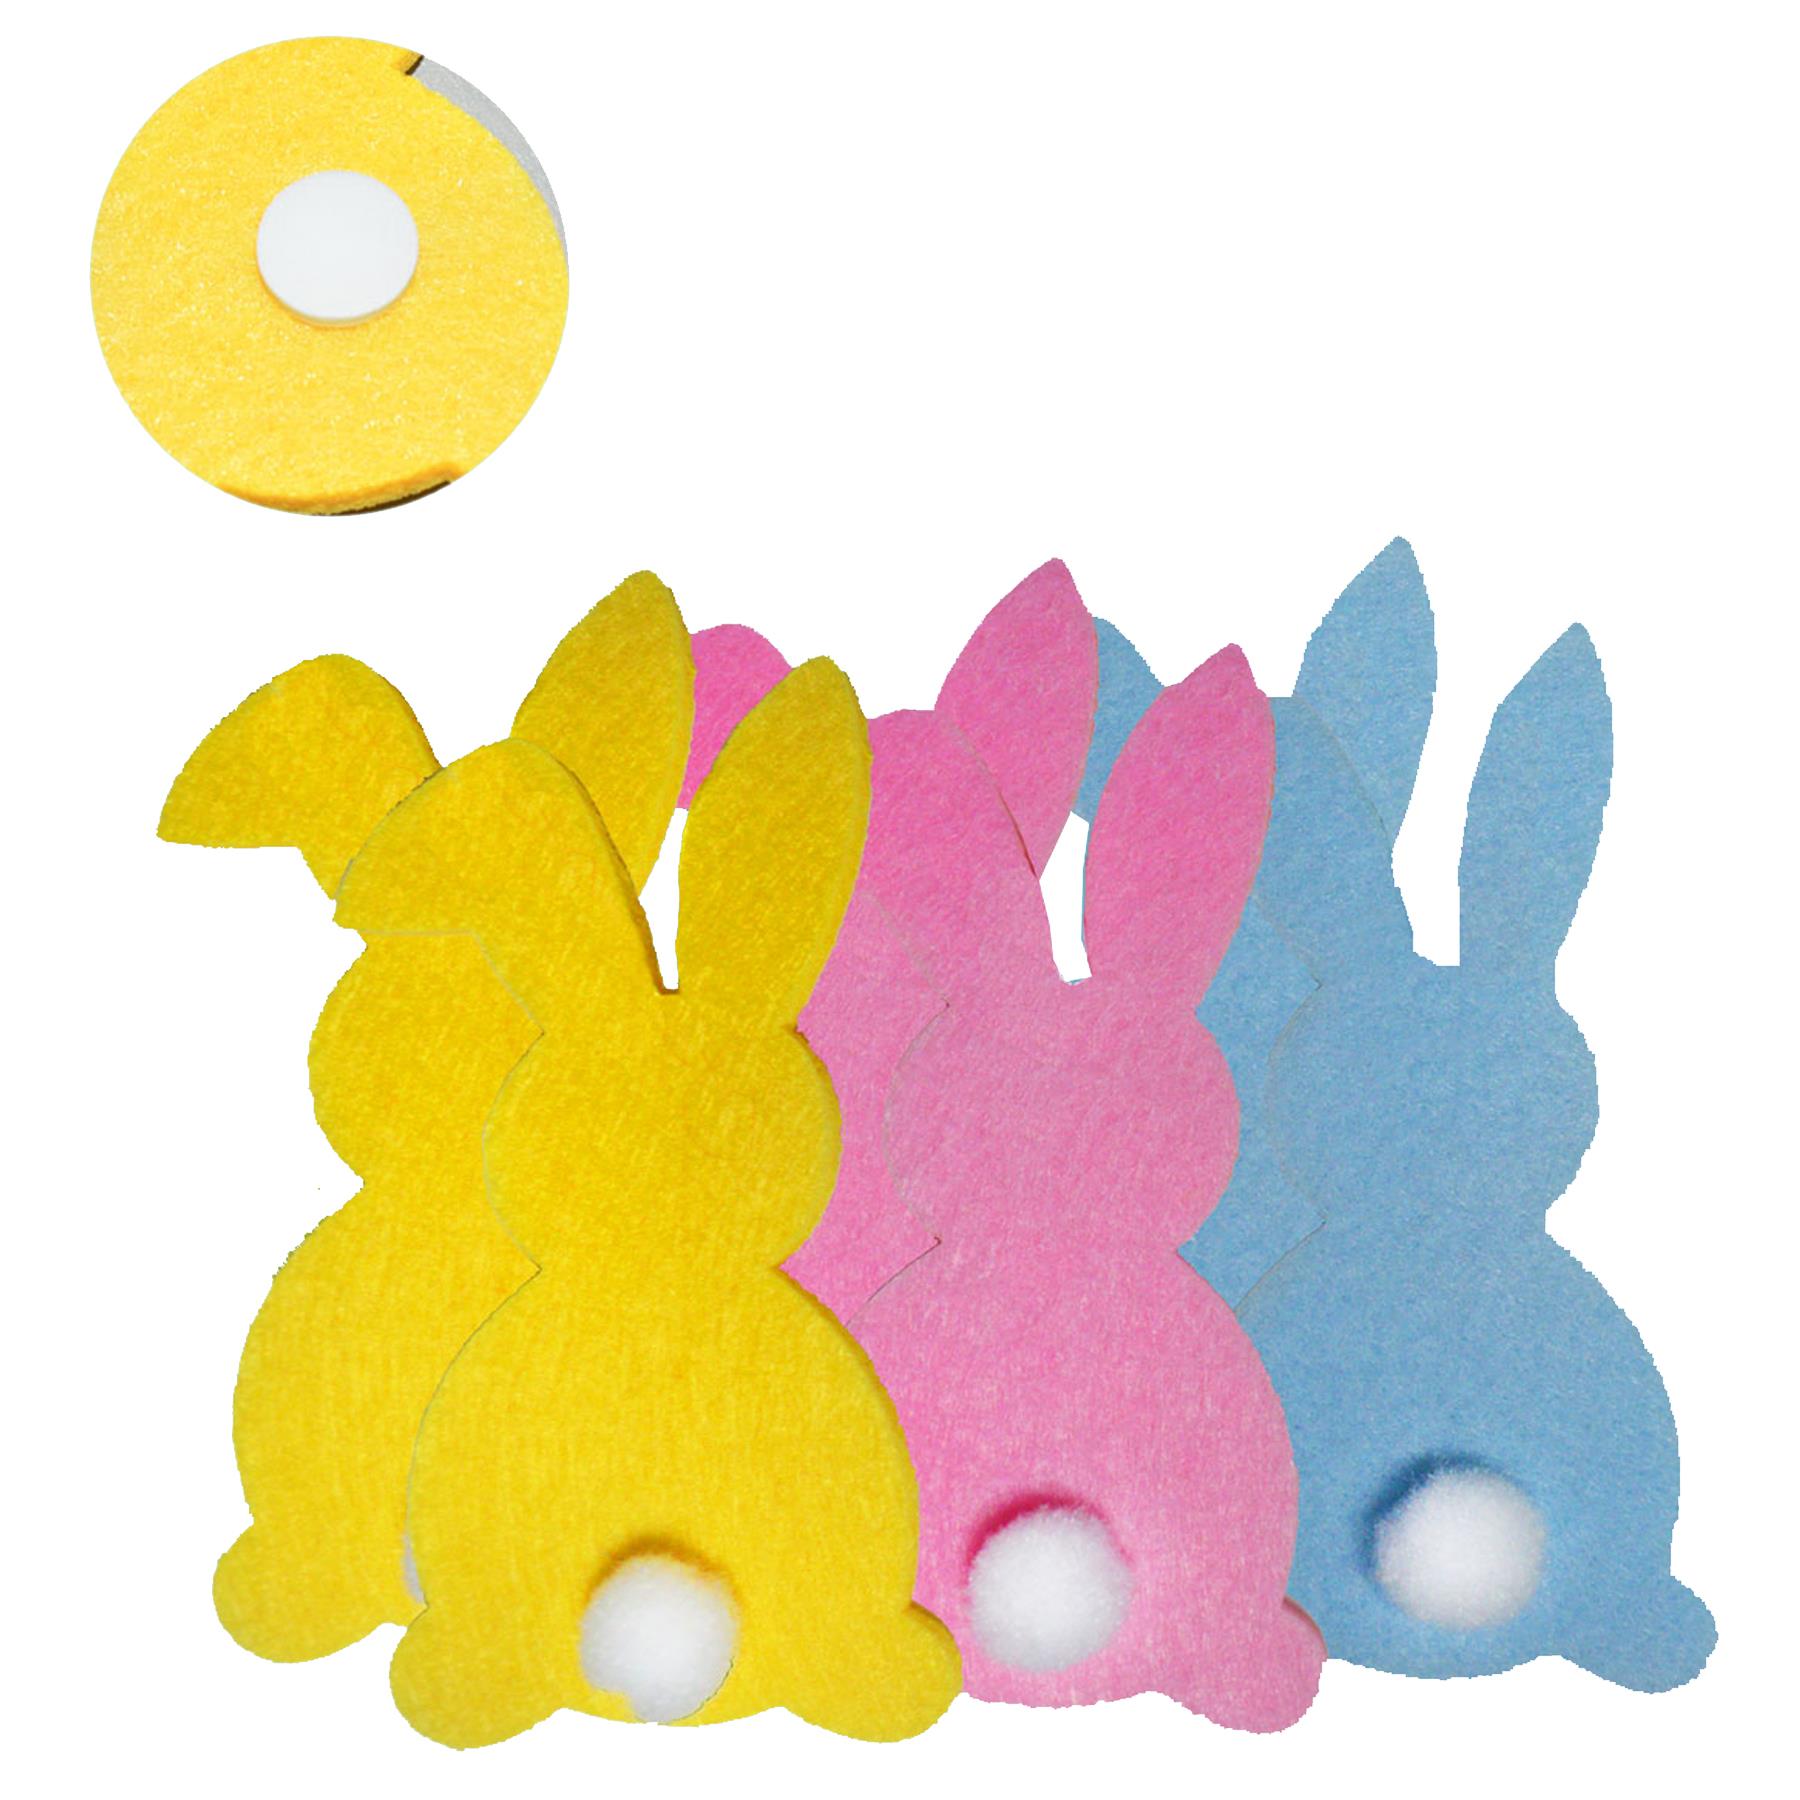 Easter Decorations, Bonnet Making, Arts and Crafts - 6 Pack Felt Bunny Shapes